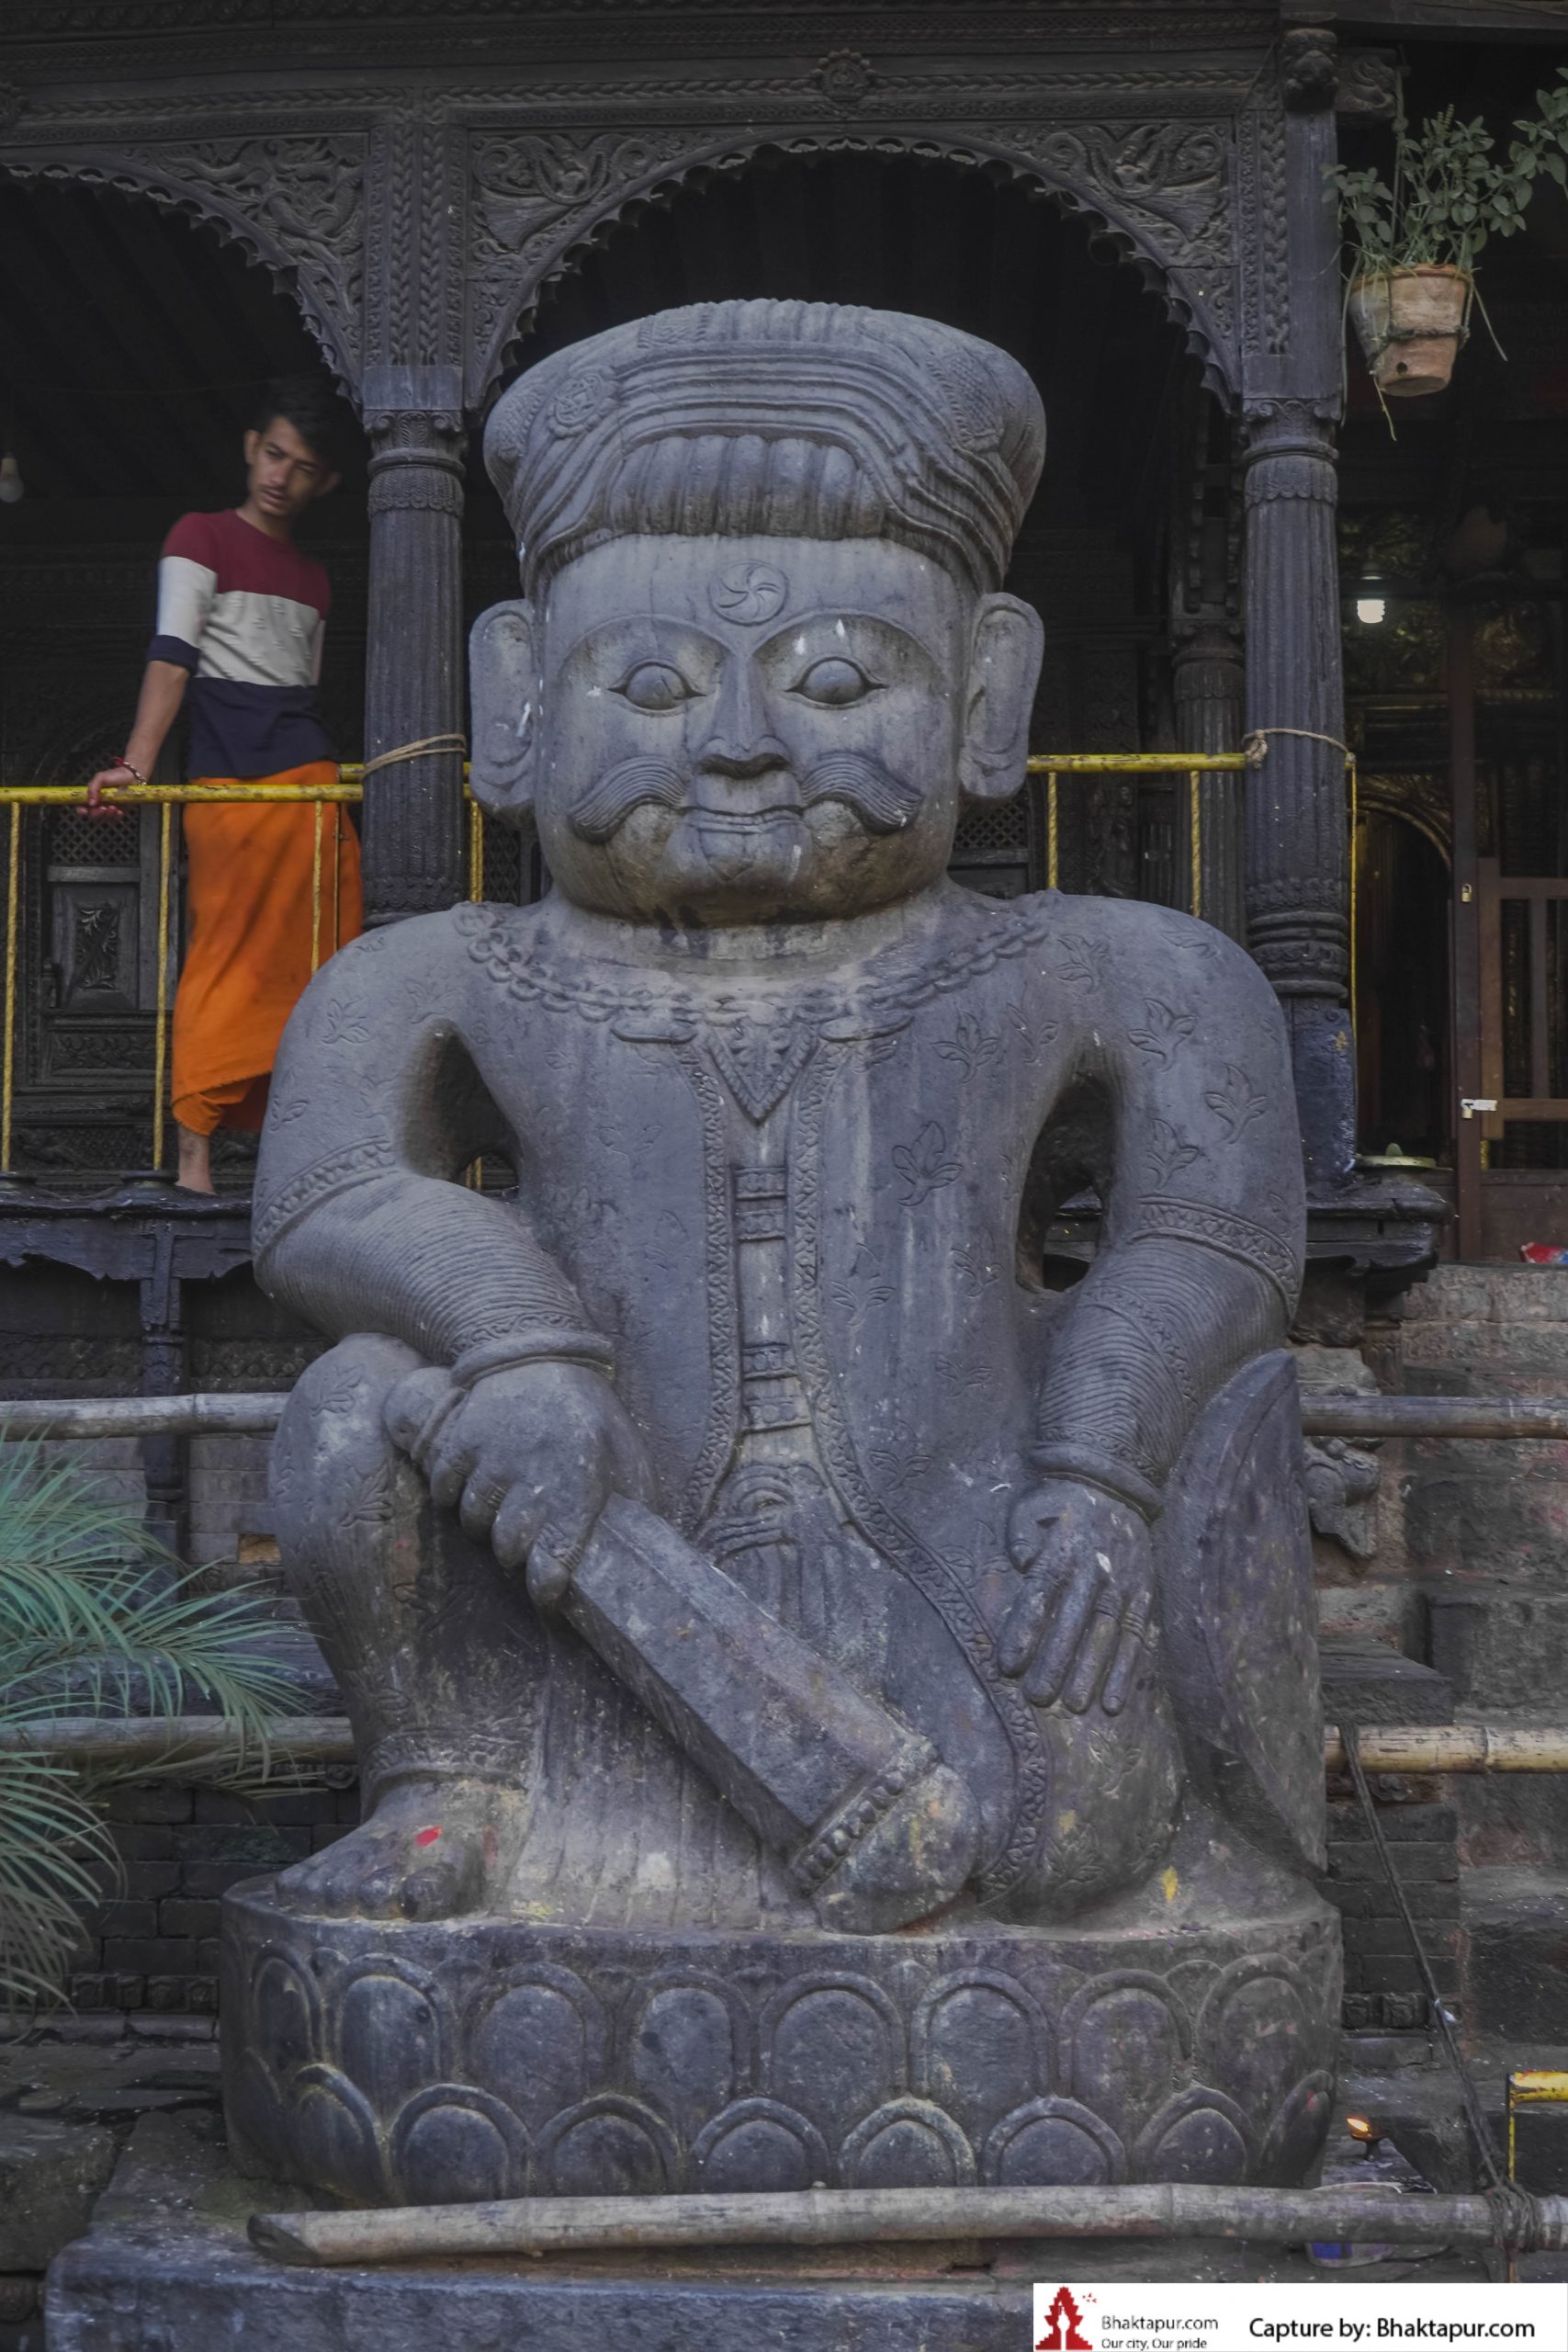 The statues of Jaimal and Pratap image